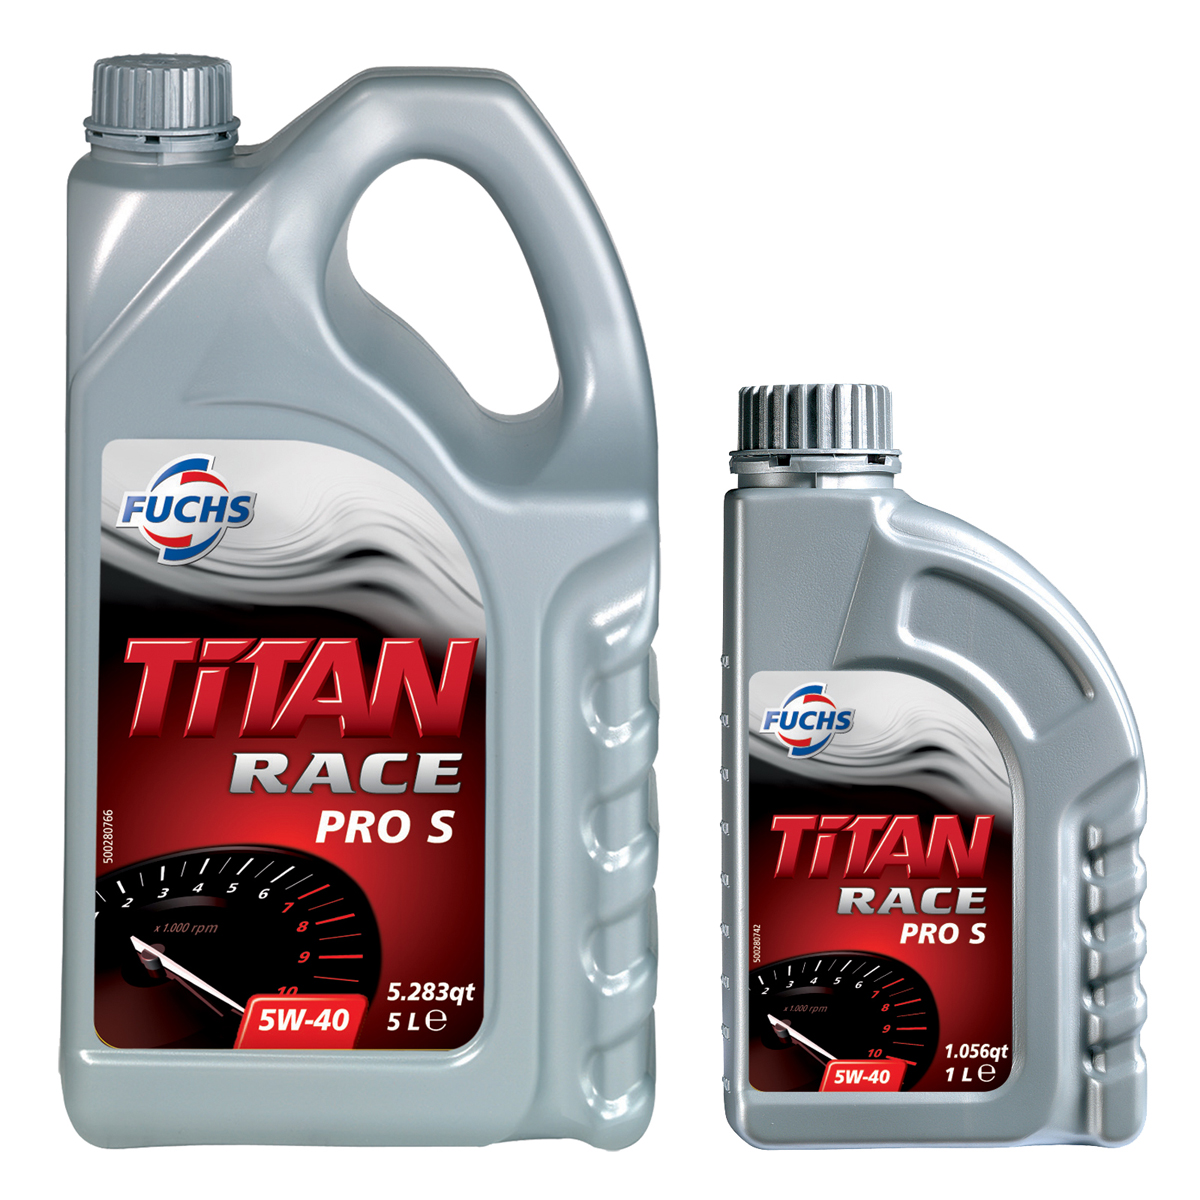 Fuchs Titan Race Pro S 5W40 Fully Synthetic Engine Oil